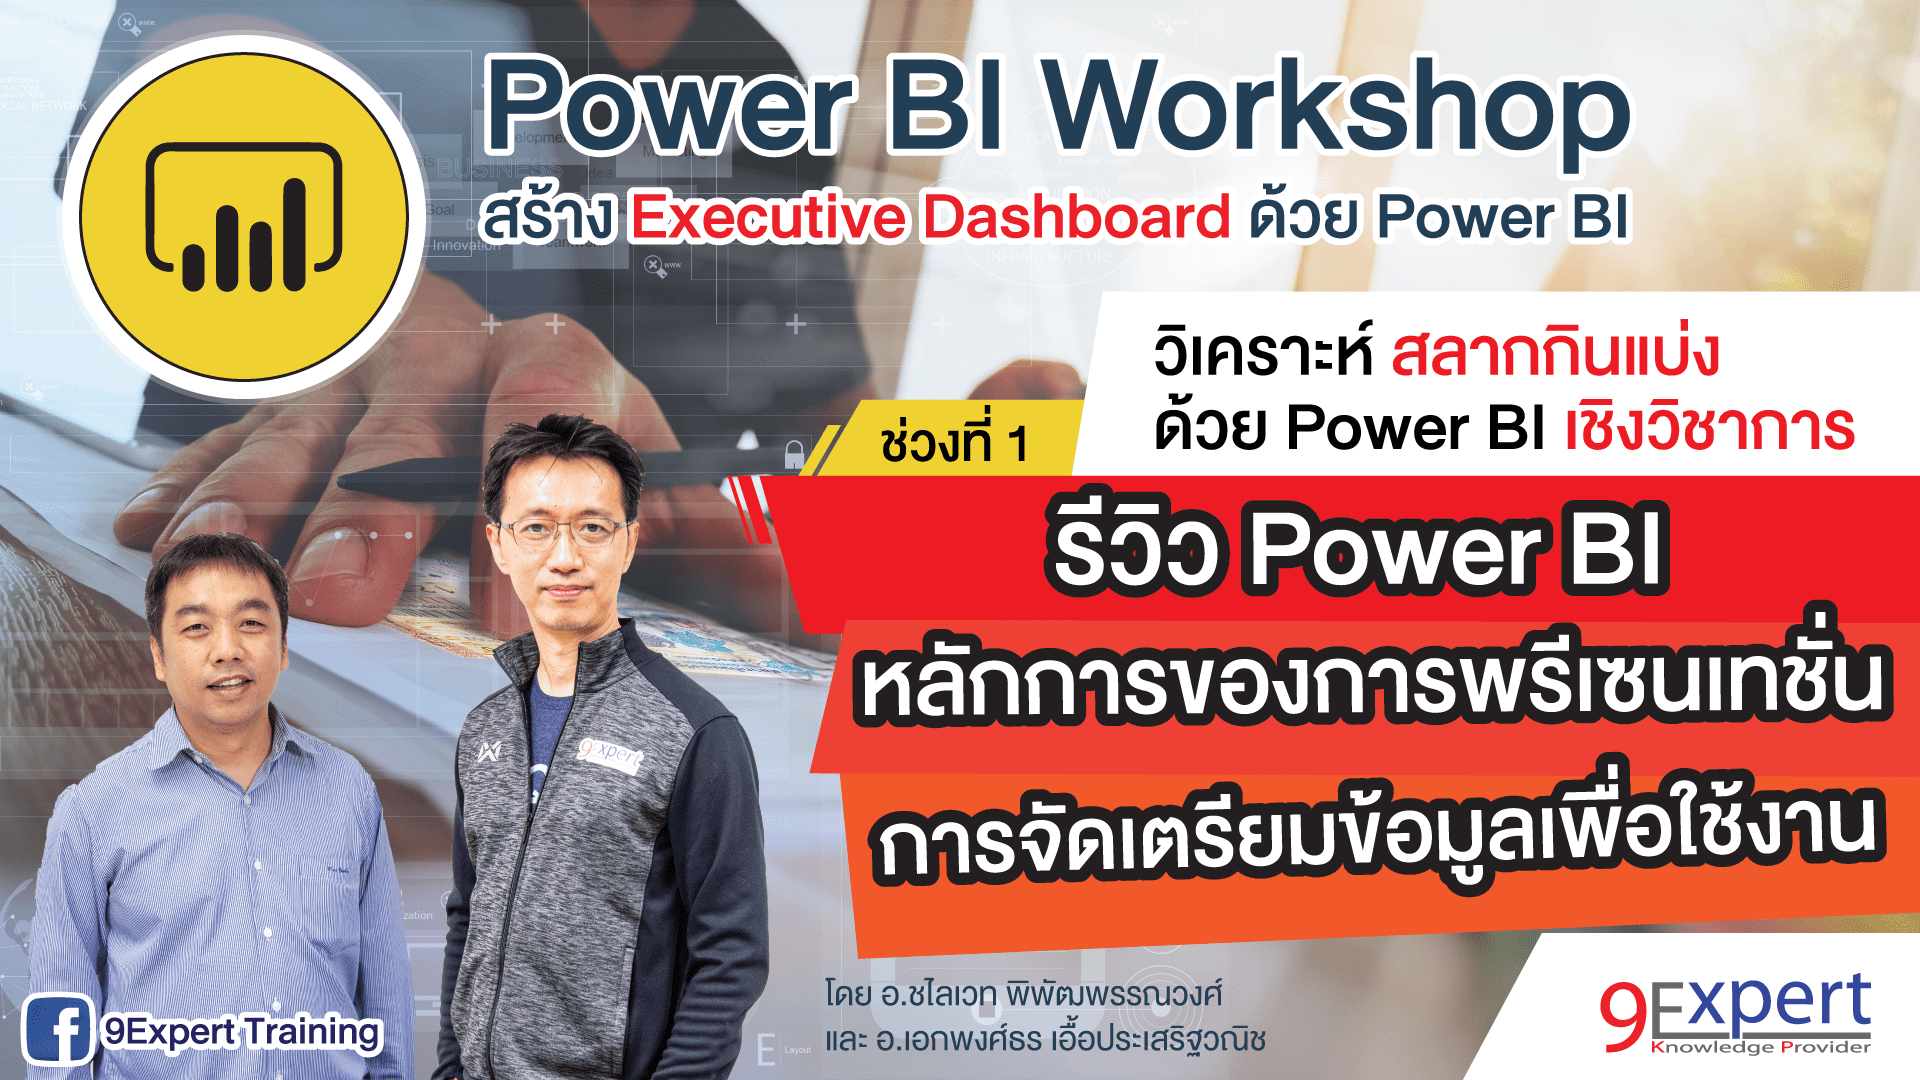 Power BI Workshop สร้าง Executive Dashboard ด้วย Microsoft Power BI Desktop 